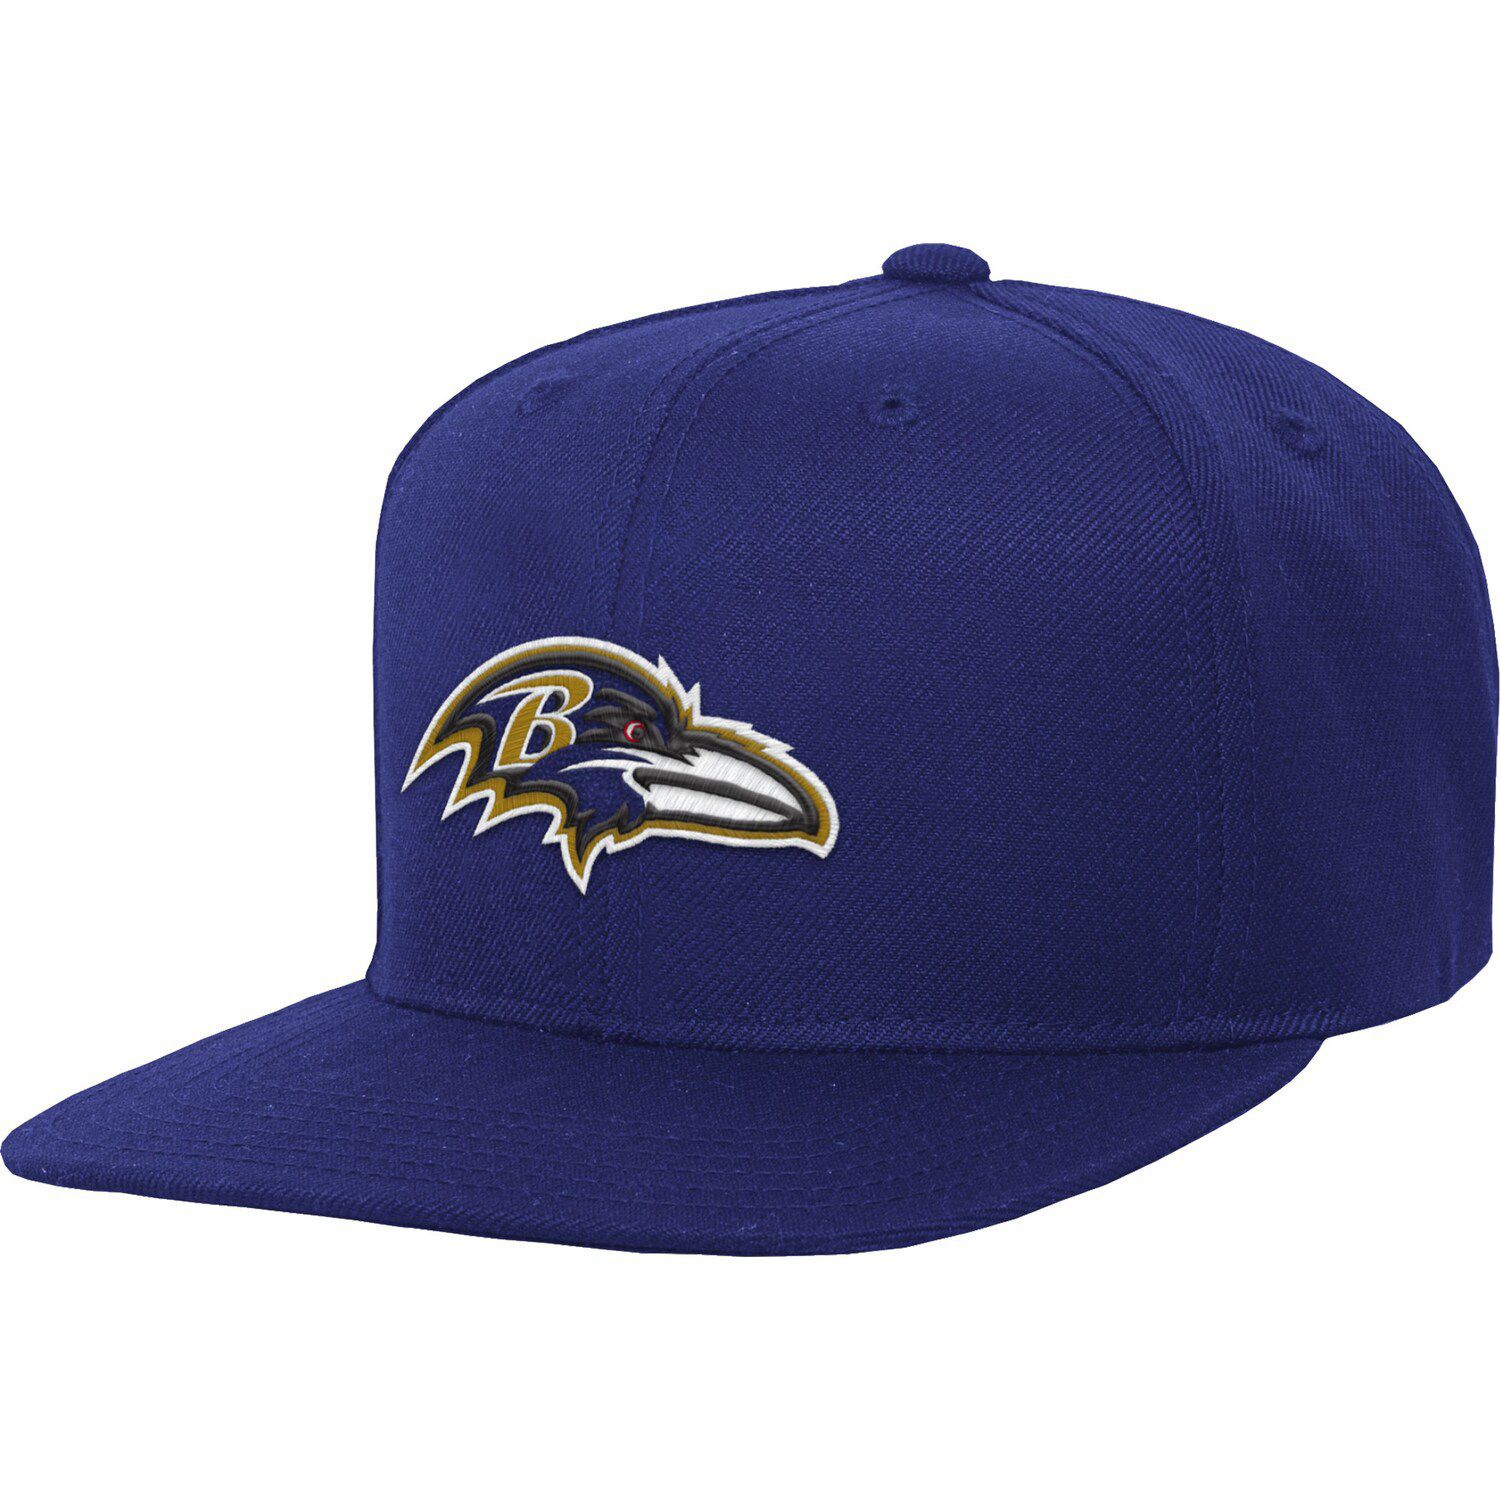 Women's New Era Purple Baltimore Ravens Floral 9TWENTY Adjustable Hat